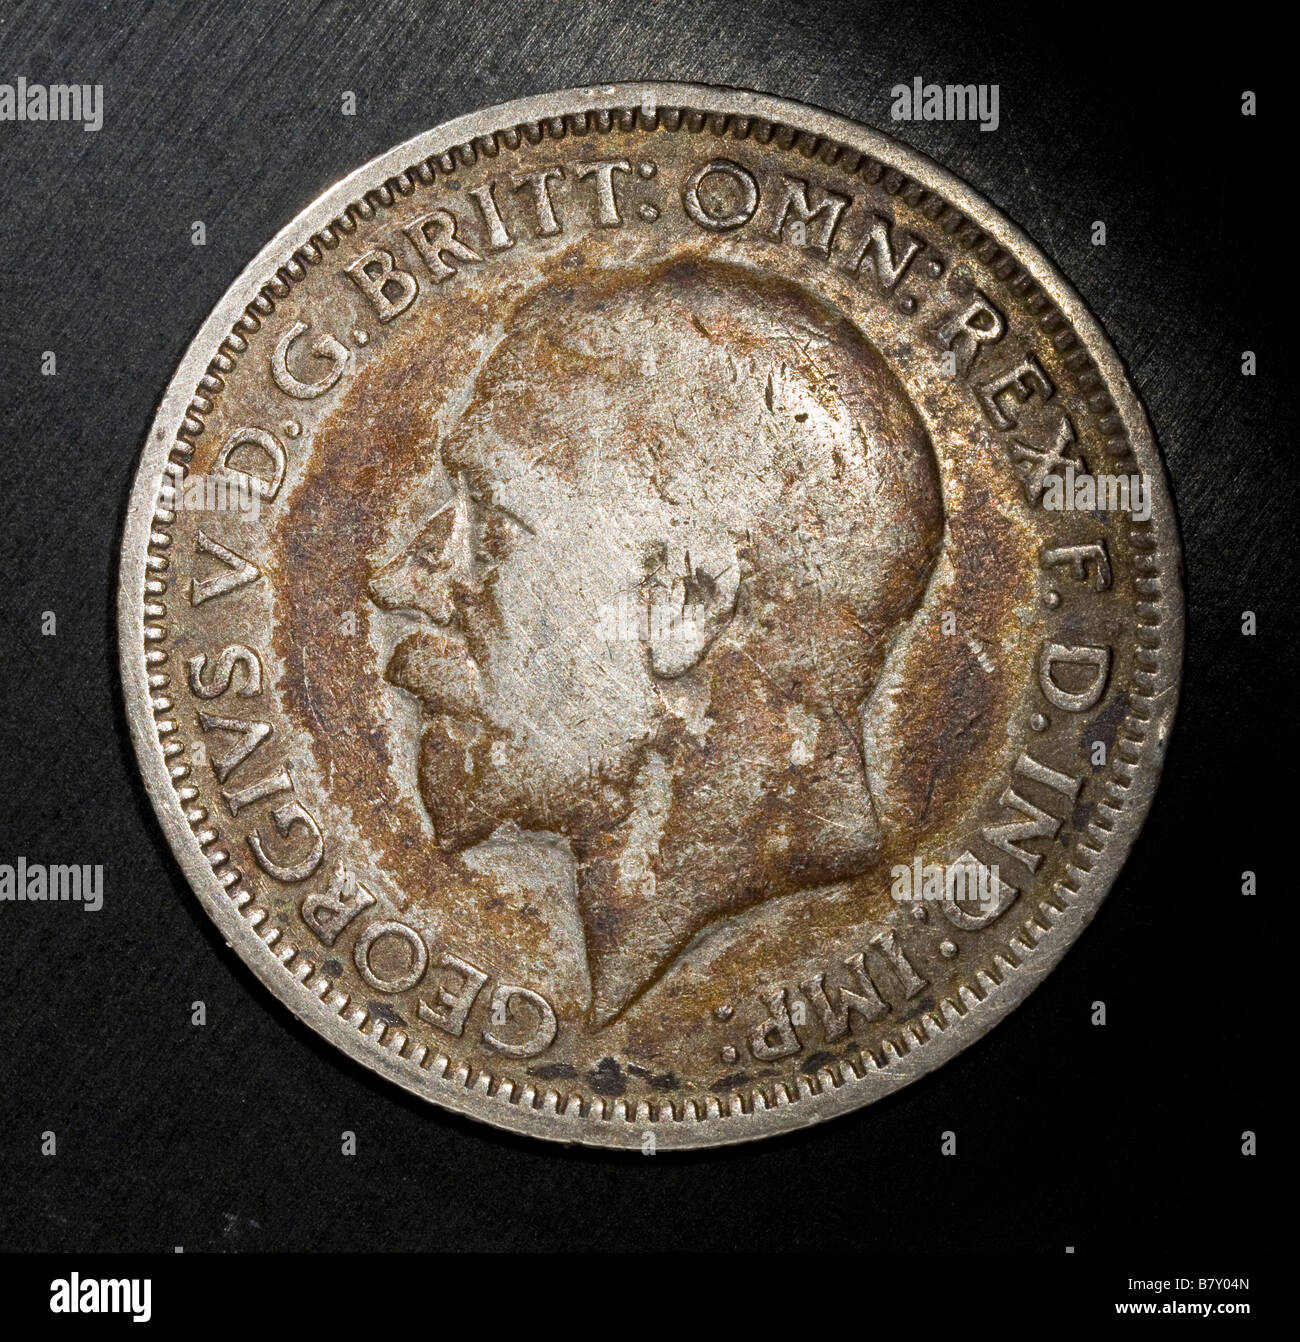 6d sixpence tanner metà scellino King George quinto V Gran Bretagna moderna 2,5 pence Foto Stock